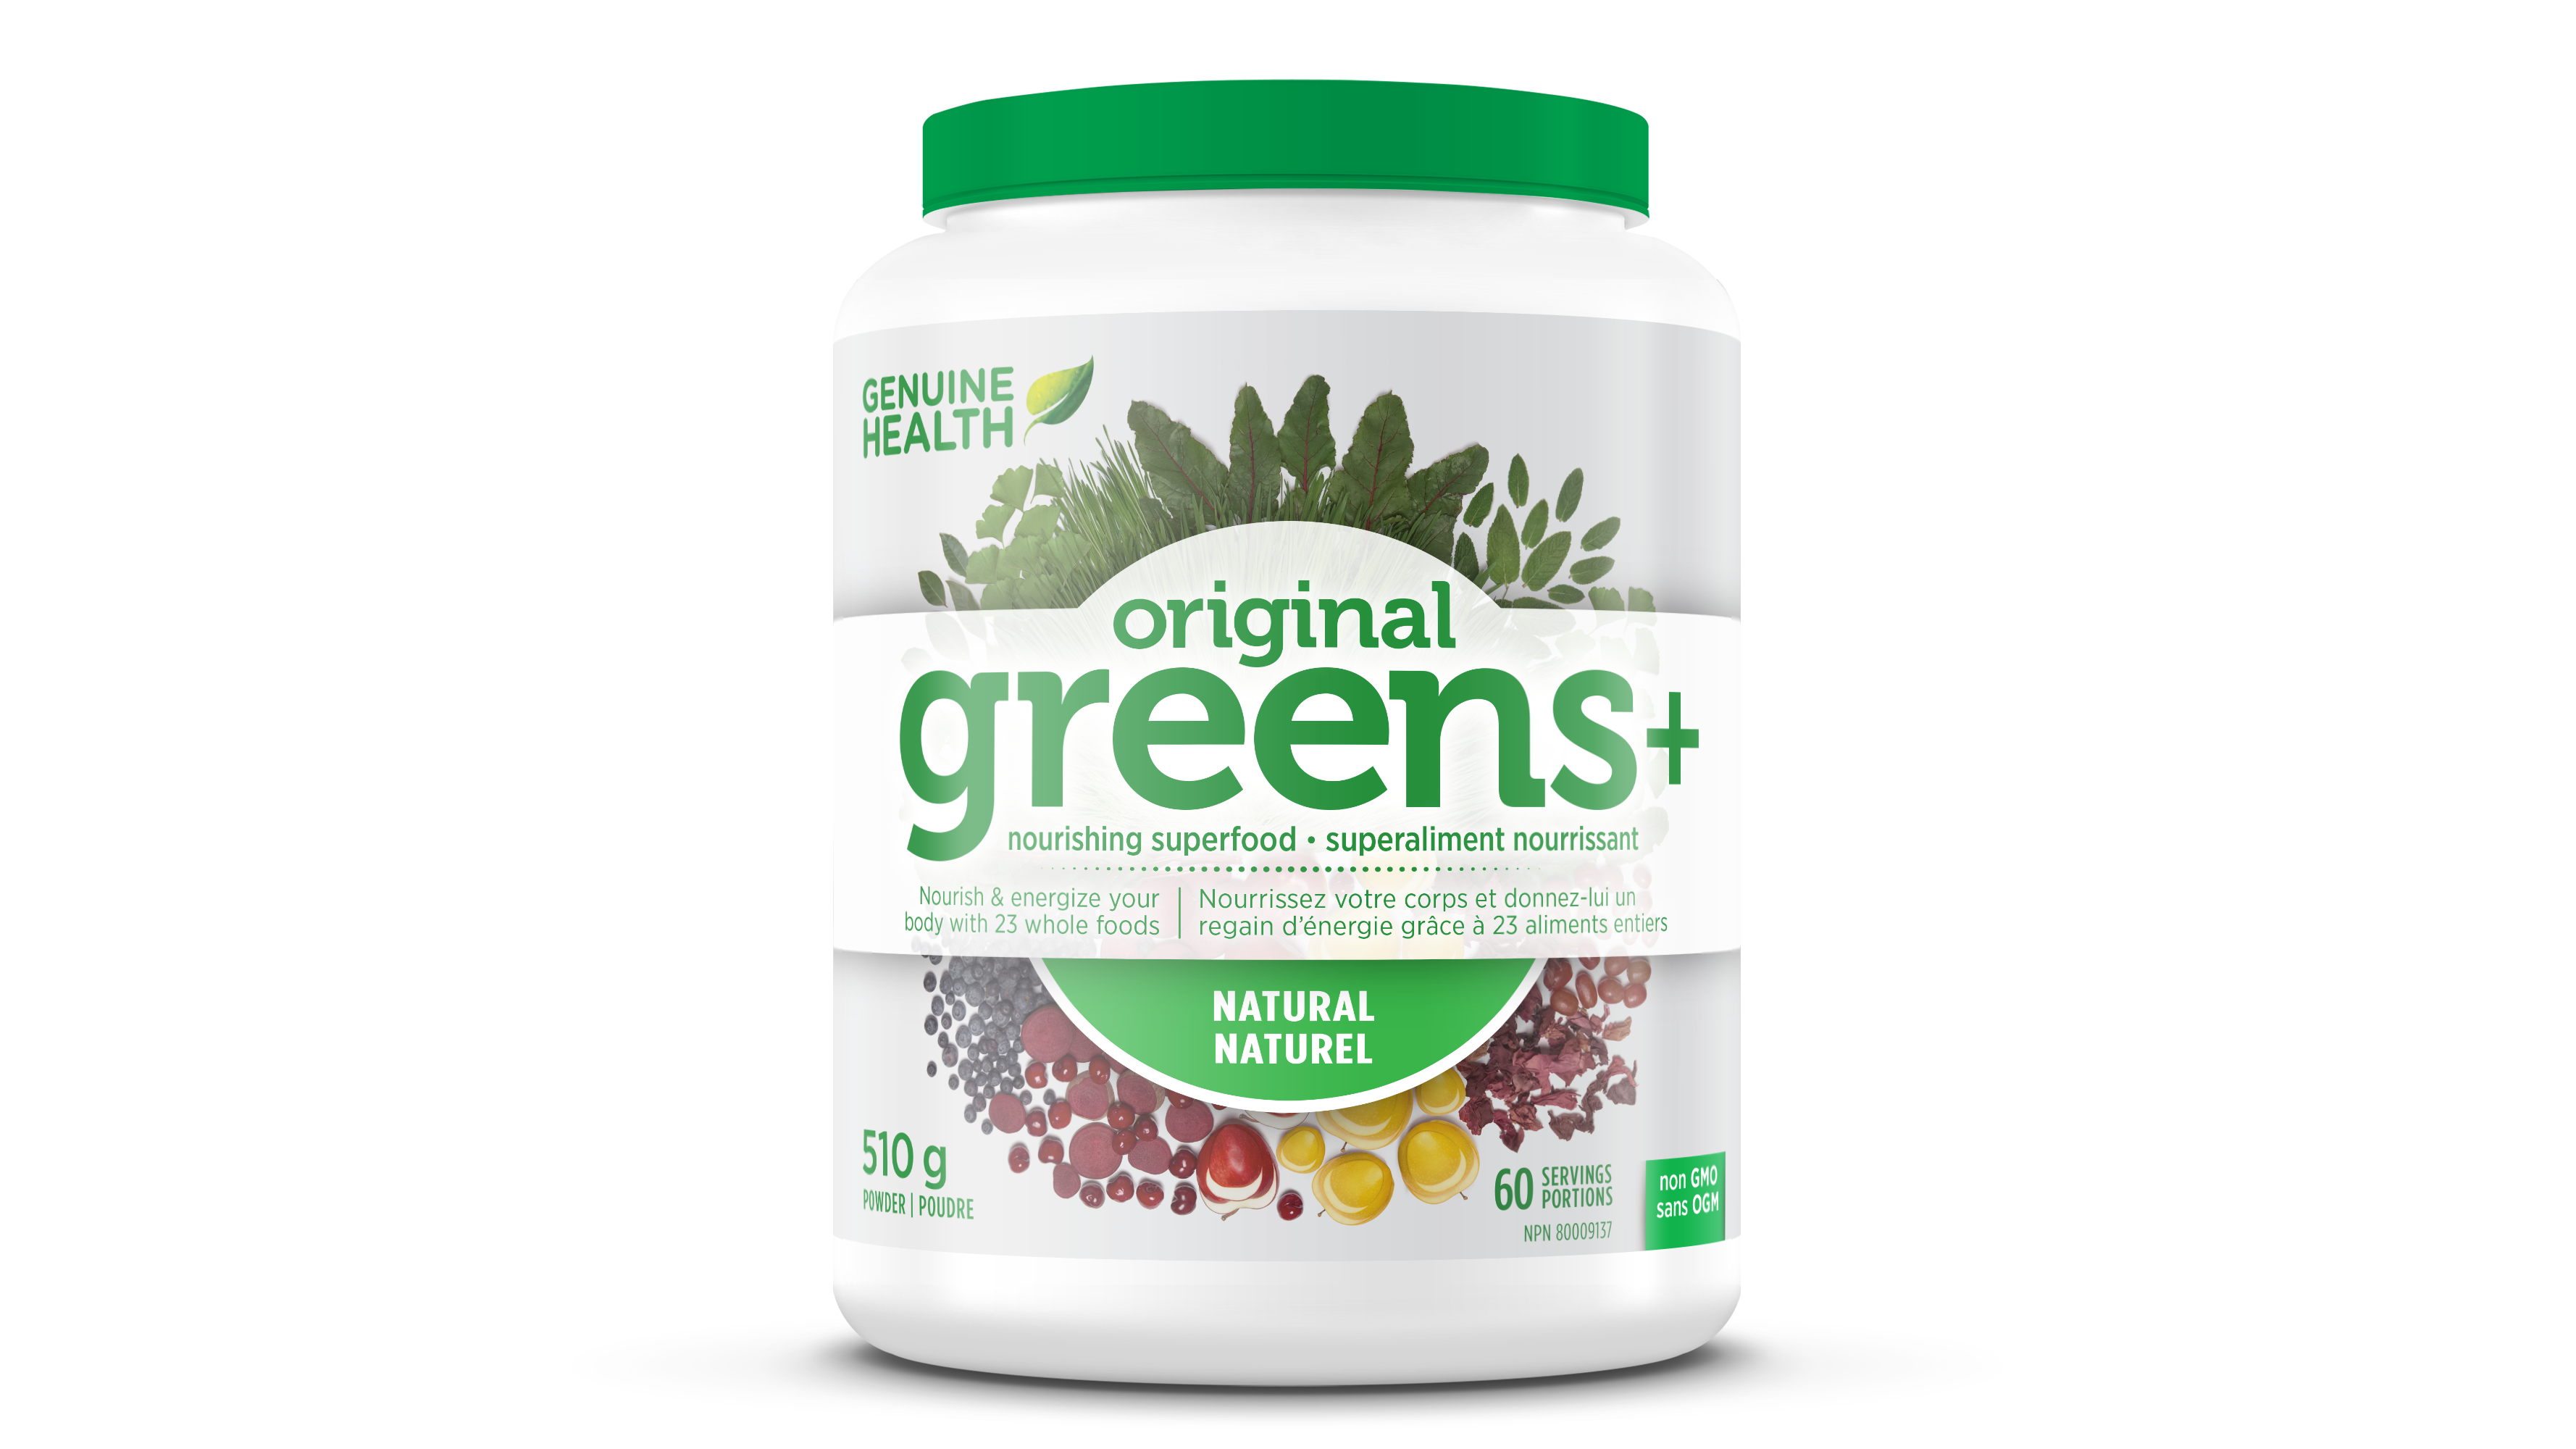 Genuine Health - greens+ Research Summary